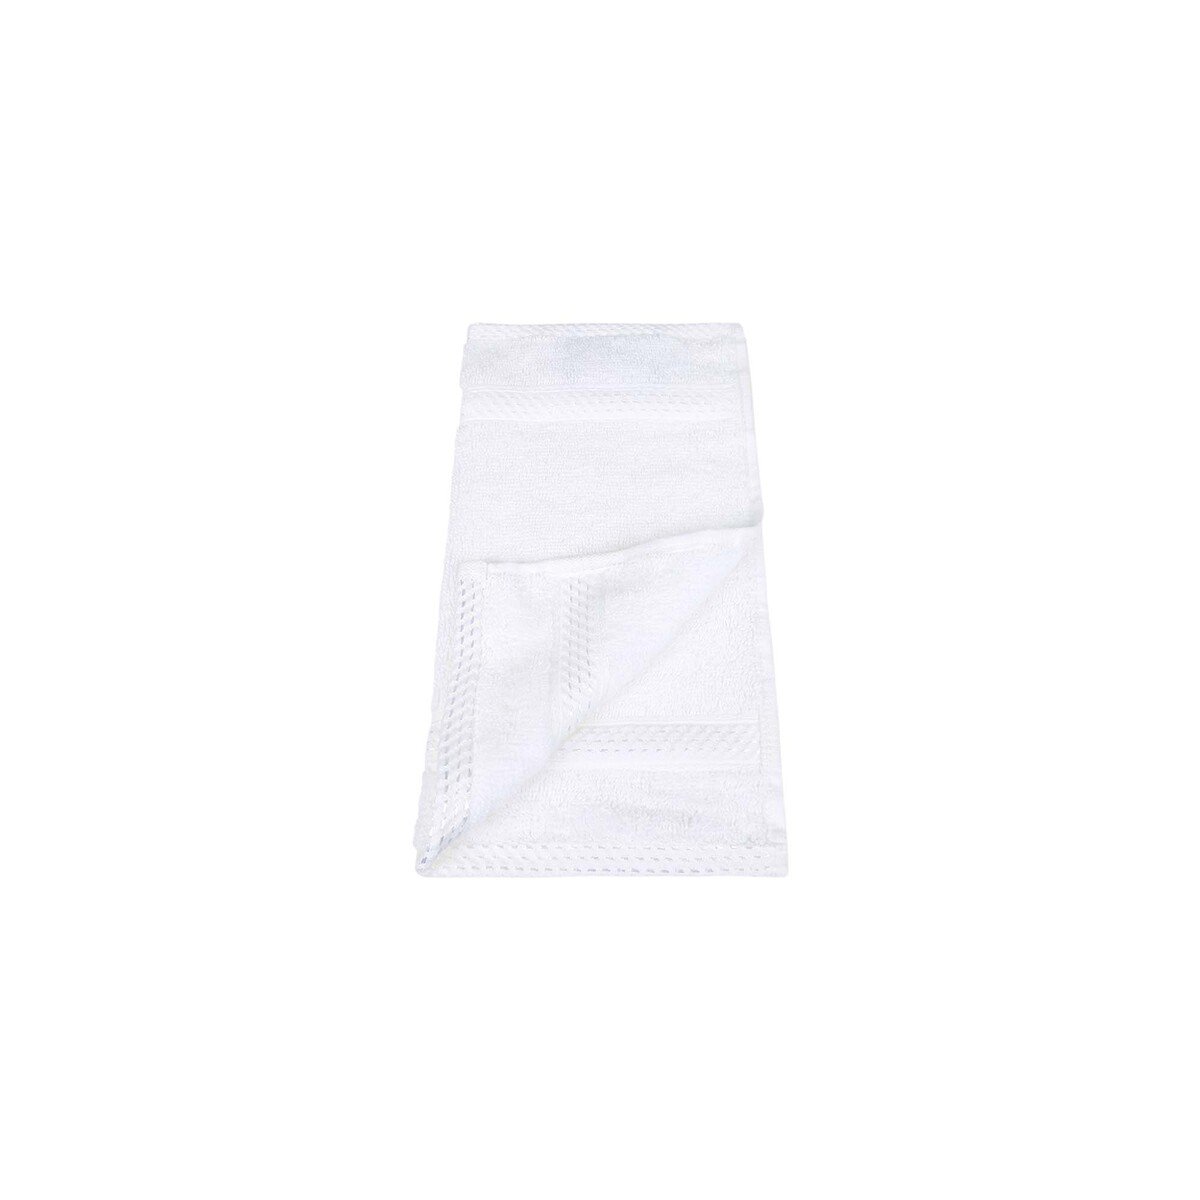 Laura Collection Face Towel White Size: W30 x L30cm